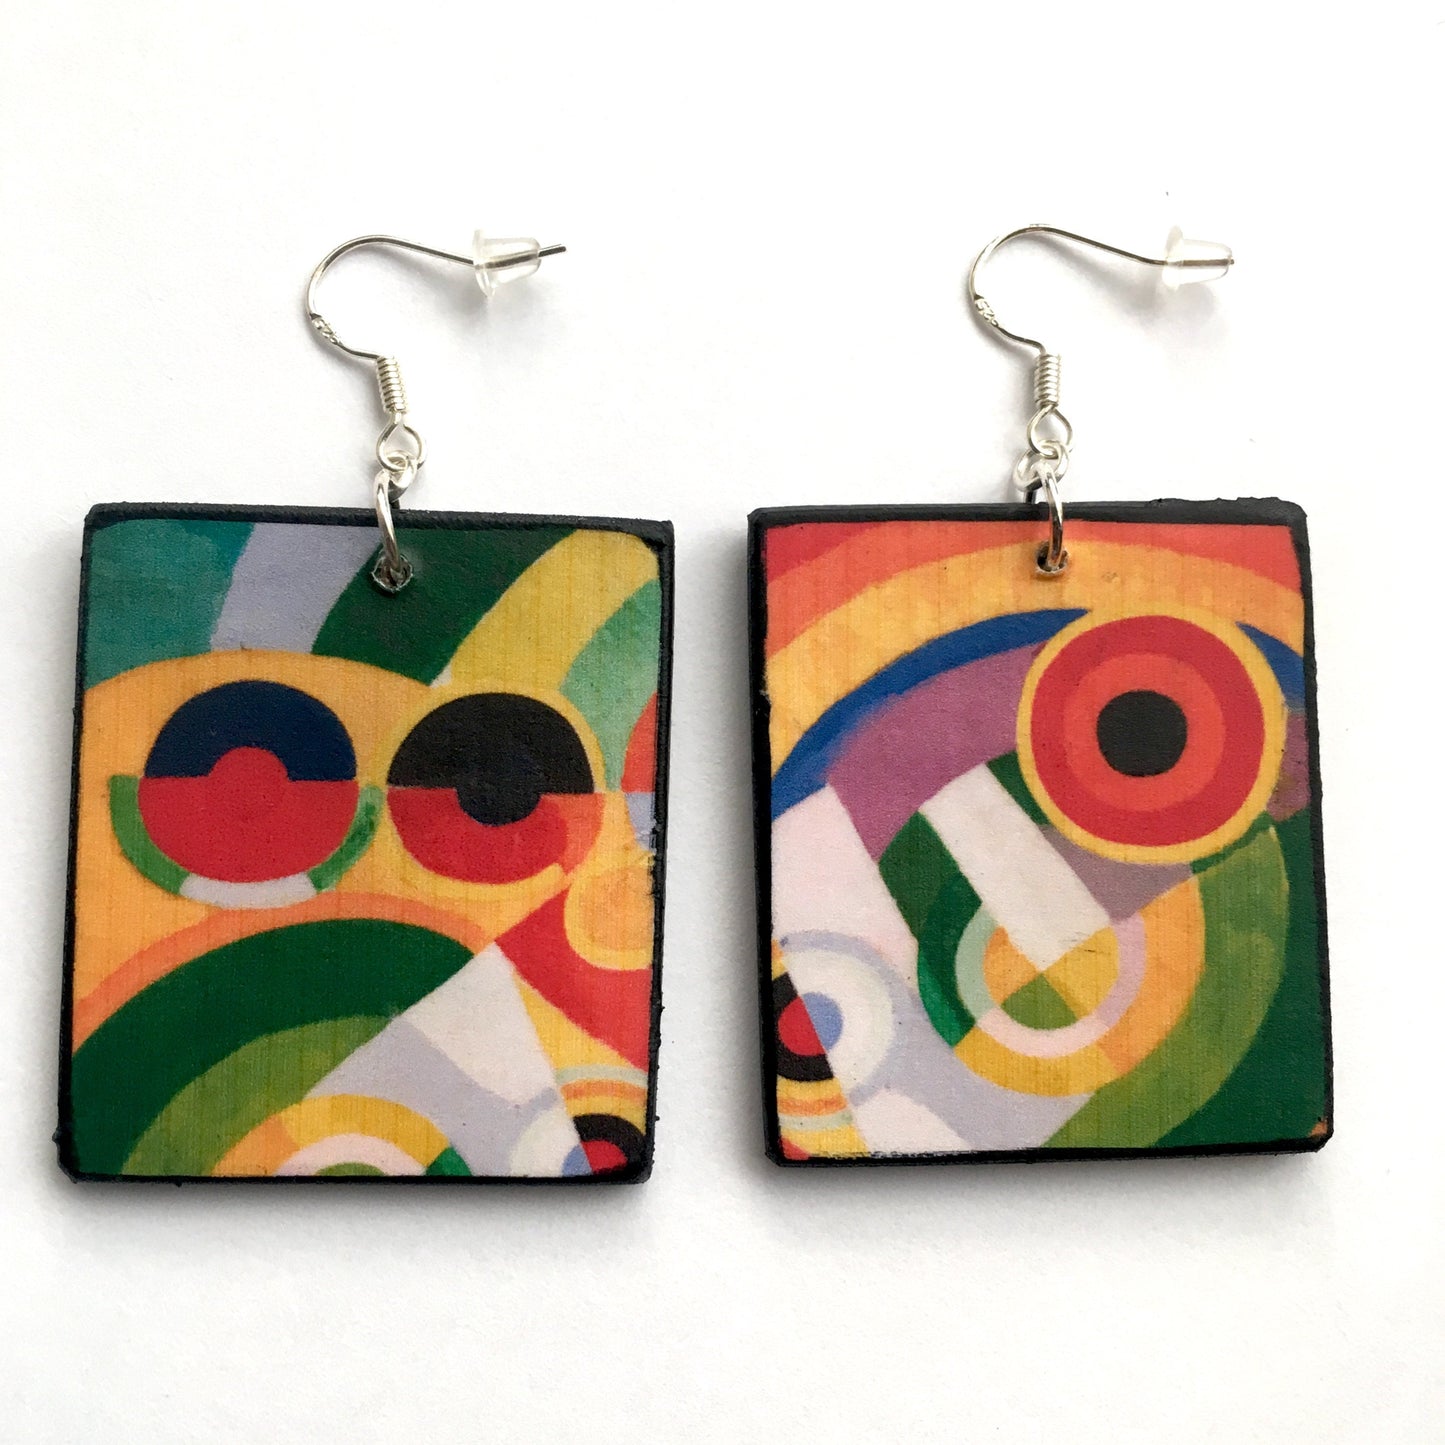 Colourful Earrings, geometric art on wood earrings.